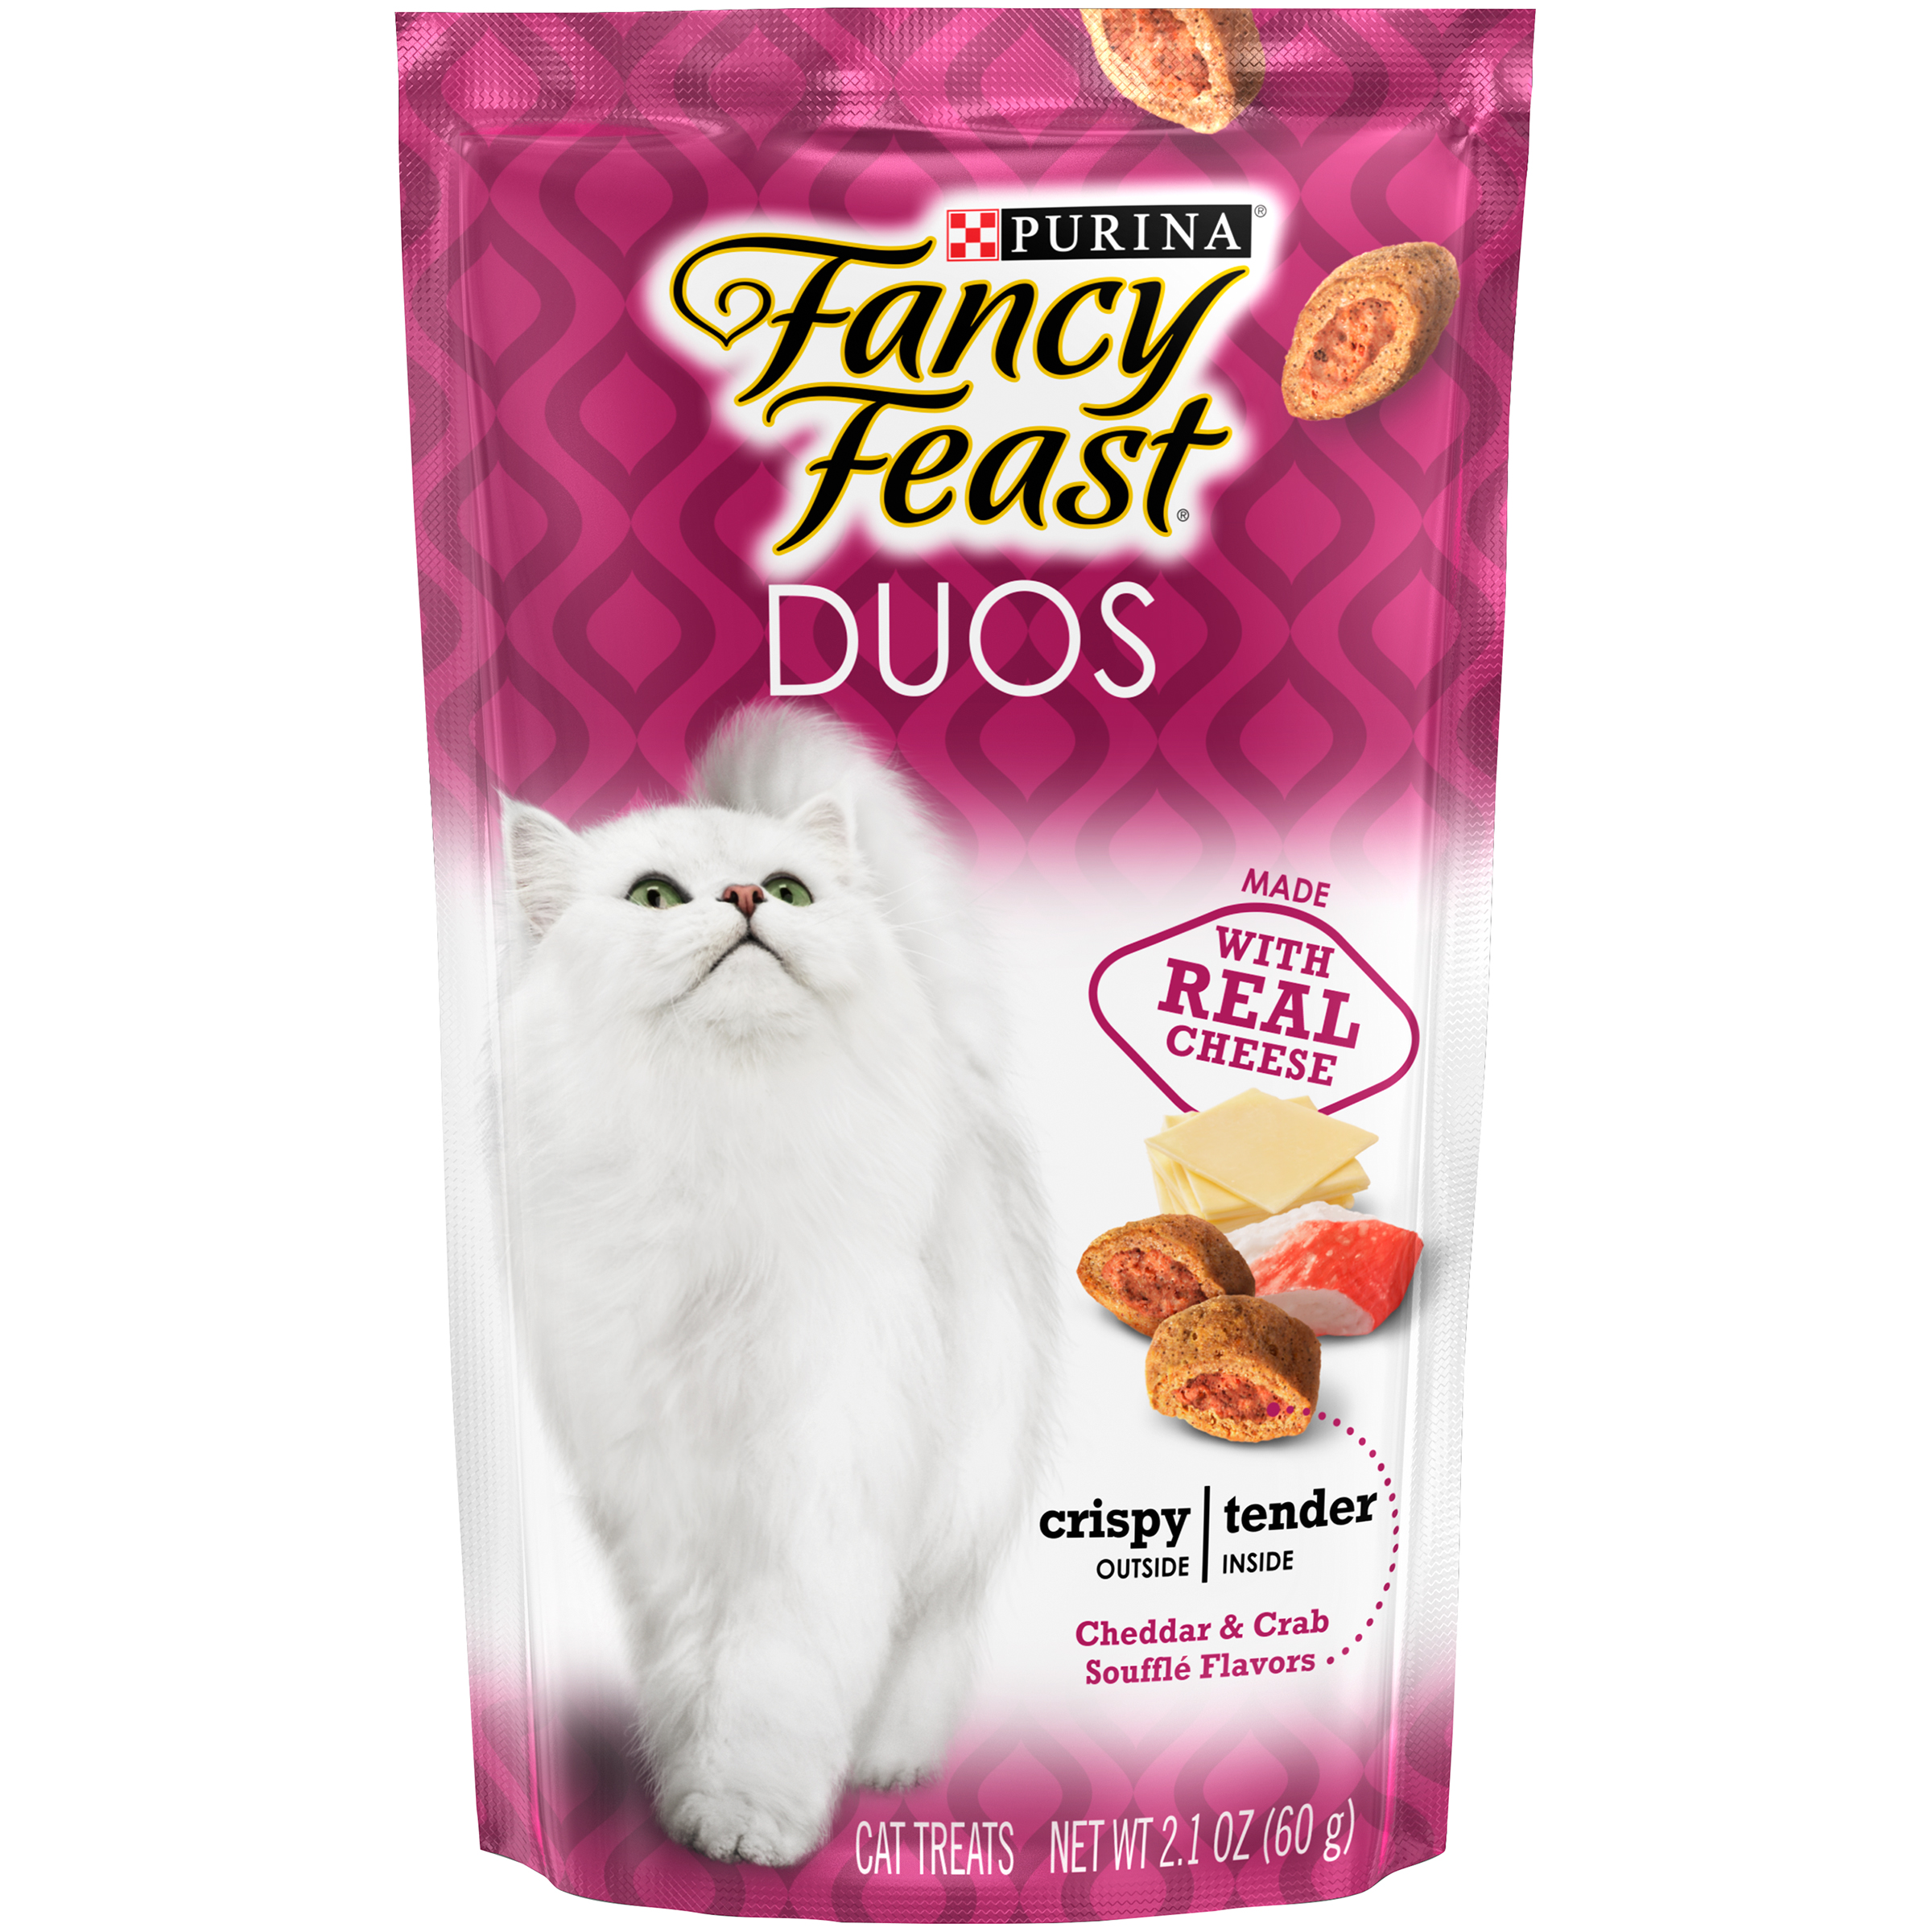 Fancy Feast Purina  Duos Cheddar & Crab Souffle Flavor Cat Treats 2.1 oz. Pouch